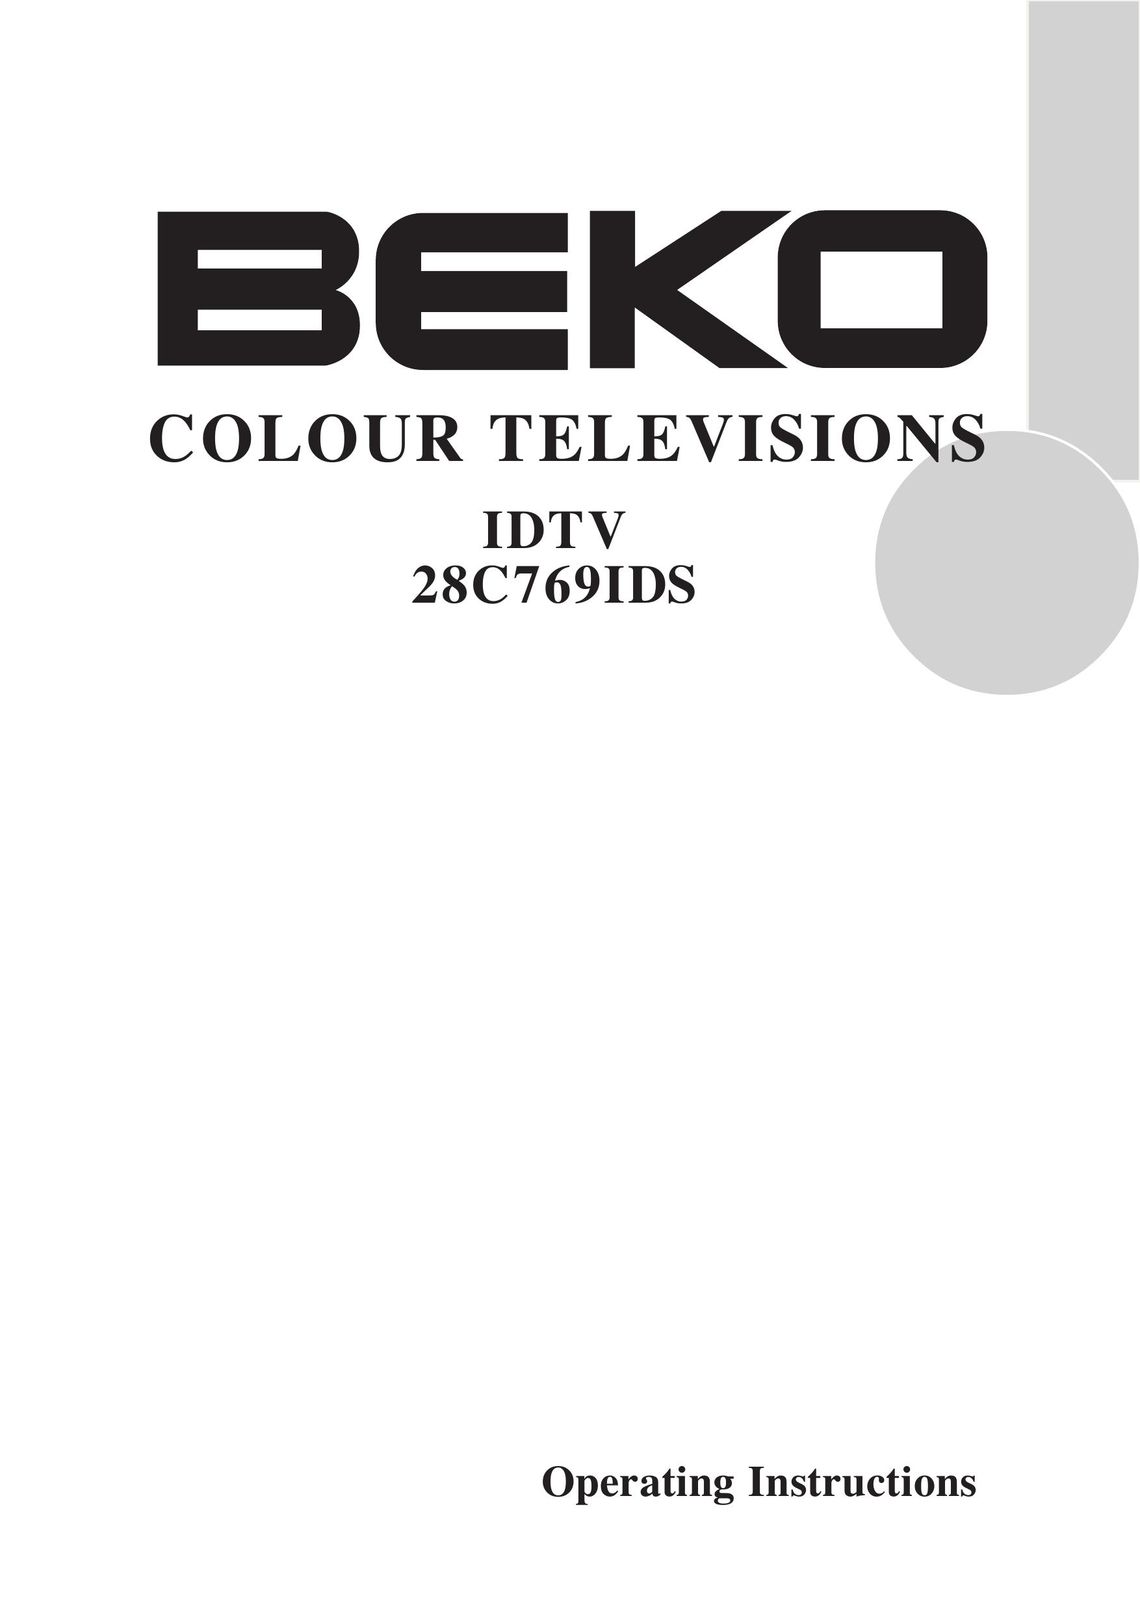 Beko 28C769IDS CRT Television User Manual